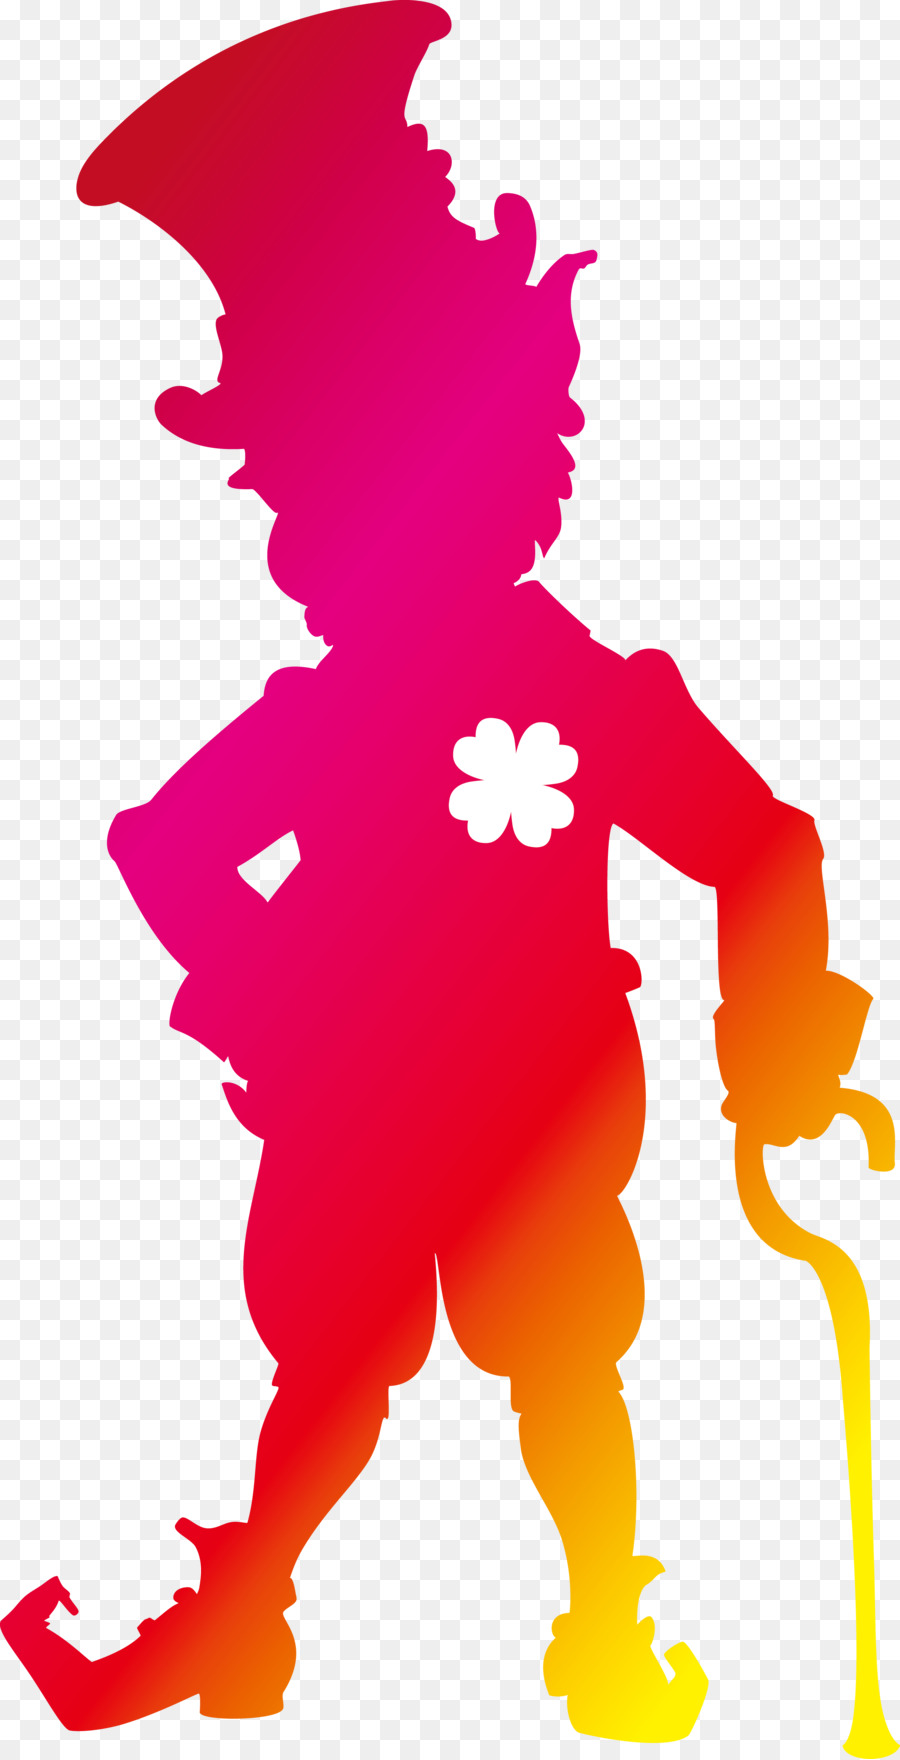 Ireland T-shirt Silhouette Saint Patricks Day - Hat man png download - 2351*4595 - Free Transparent Ireland png Download.